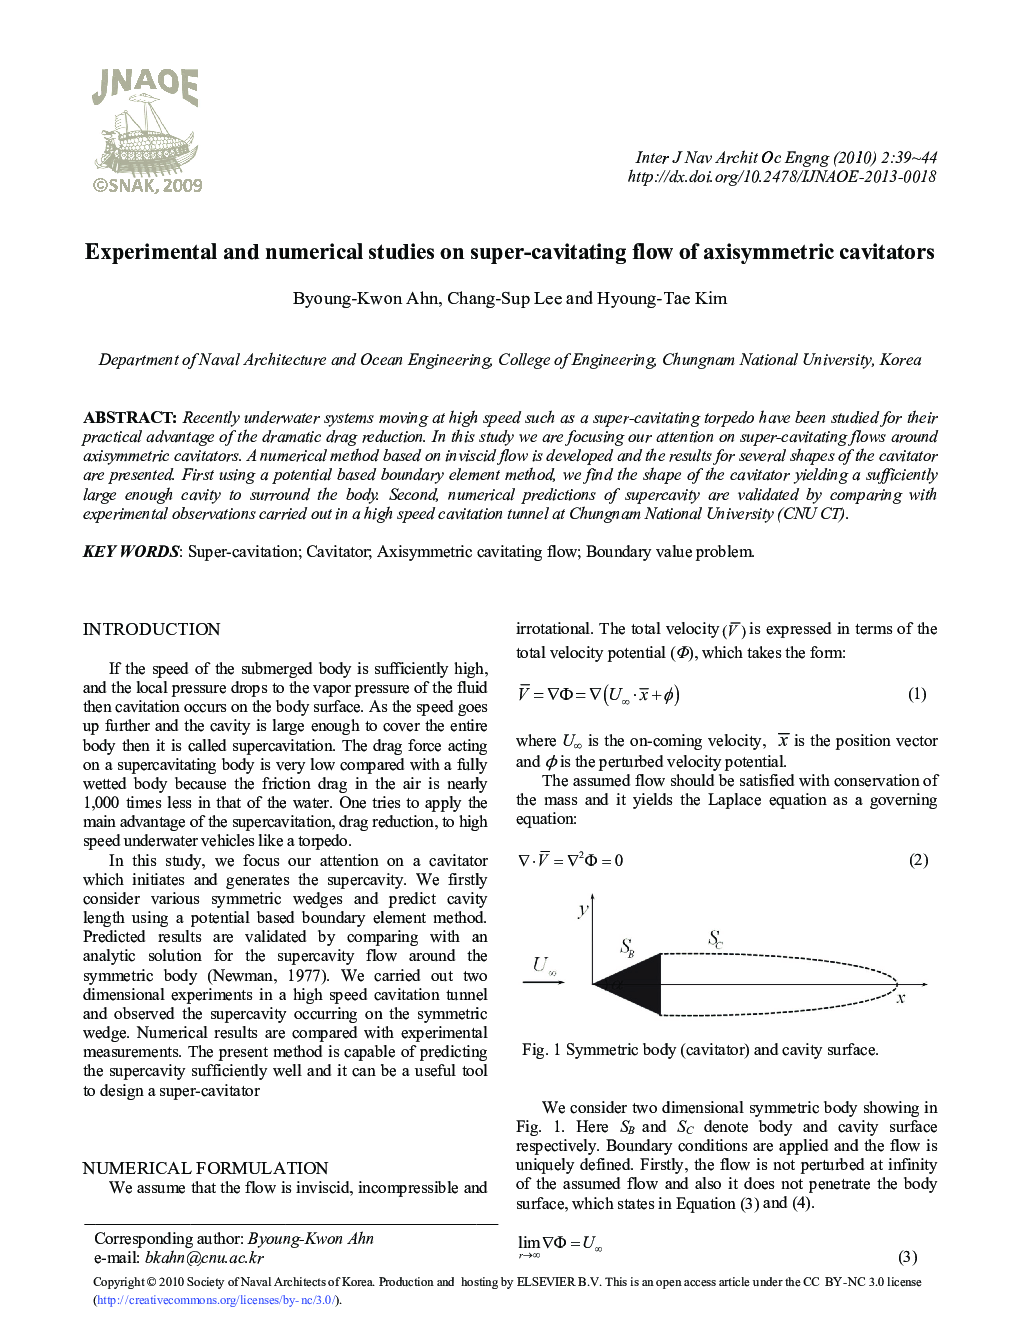 Experimental and numerical studies on super-cavitating flow of axisymmetric cavitators